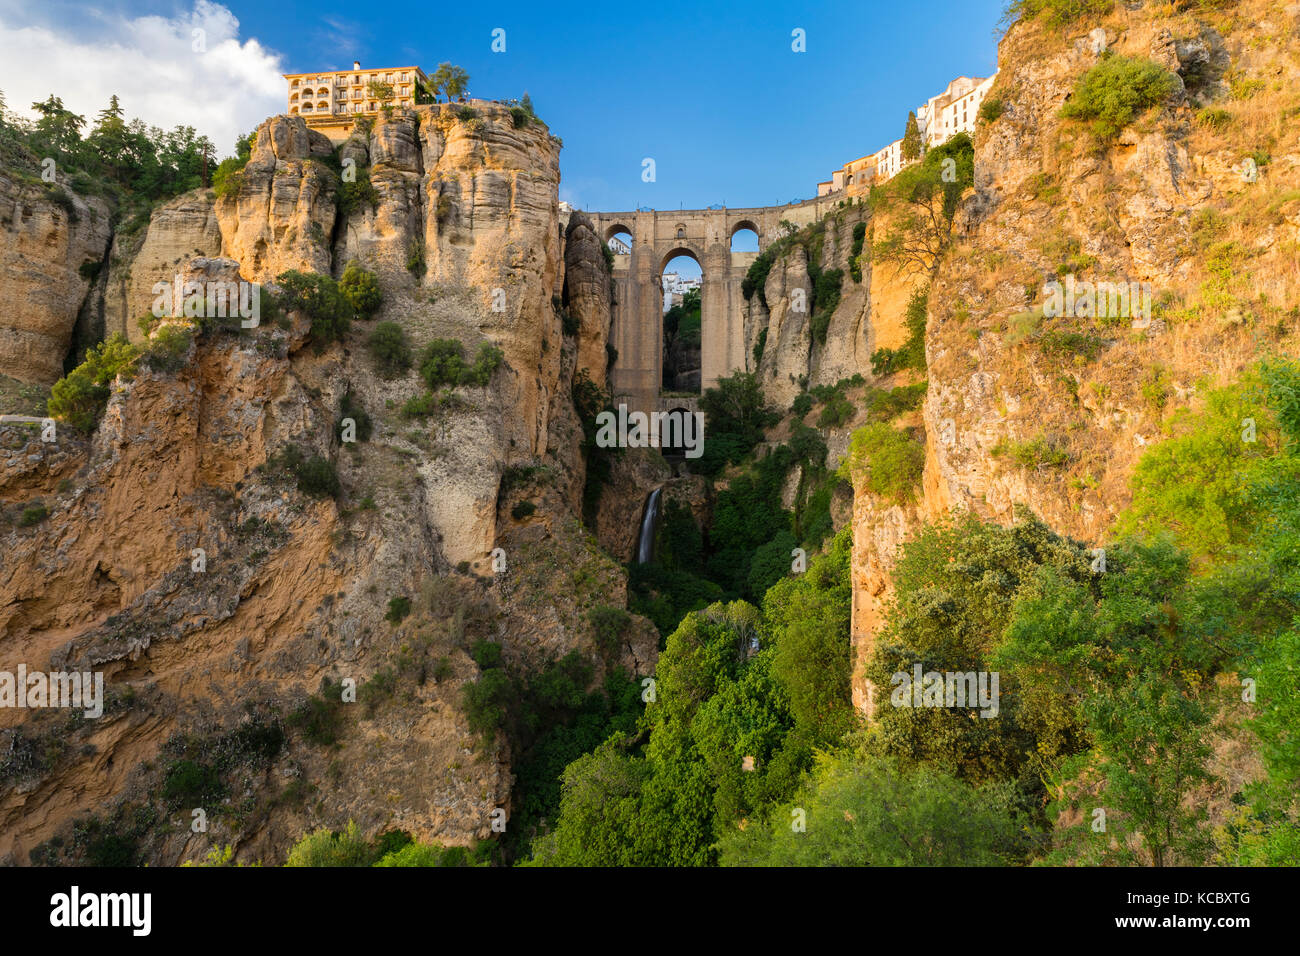 Puente Nuevo with Tajo gorge, Ronda, Malaga province, Andalusia, Spain Stock Photo